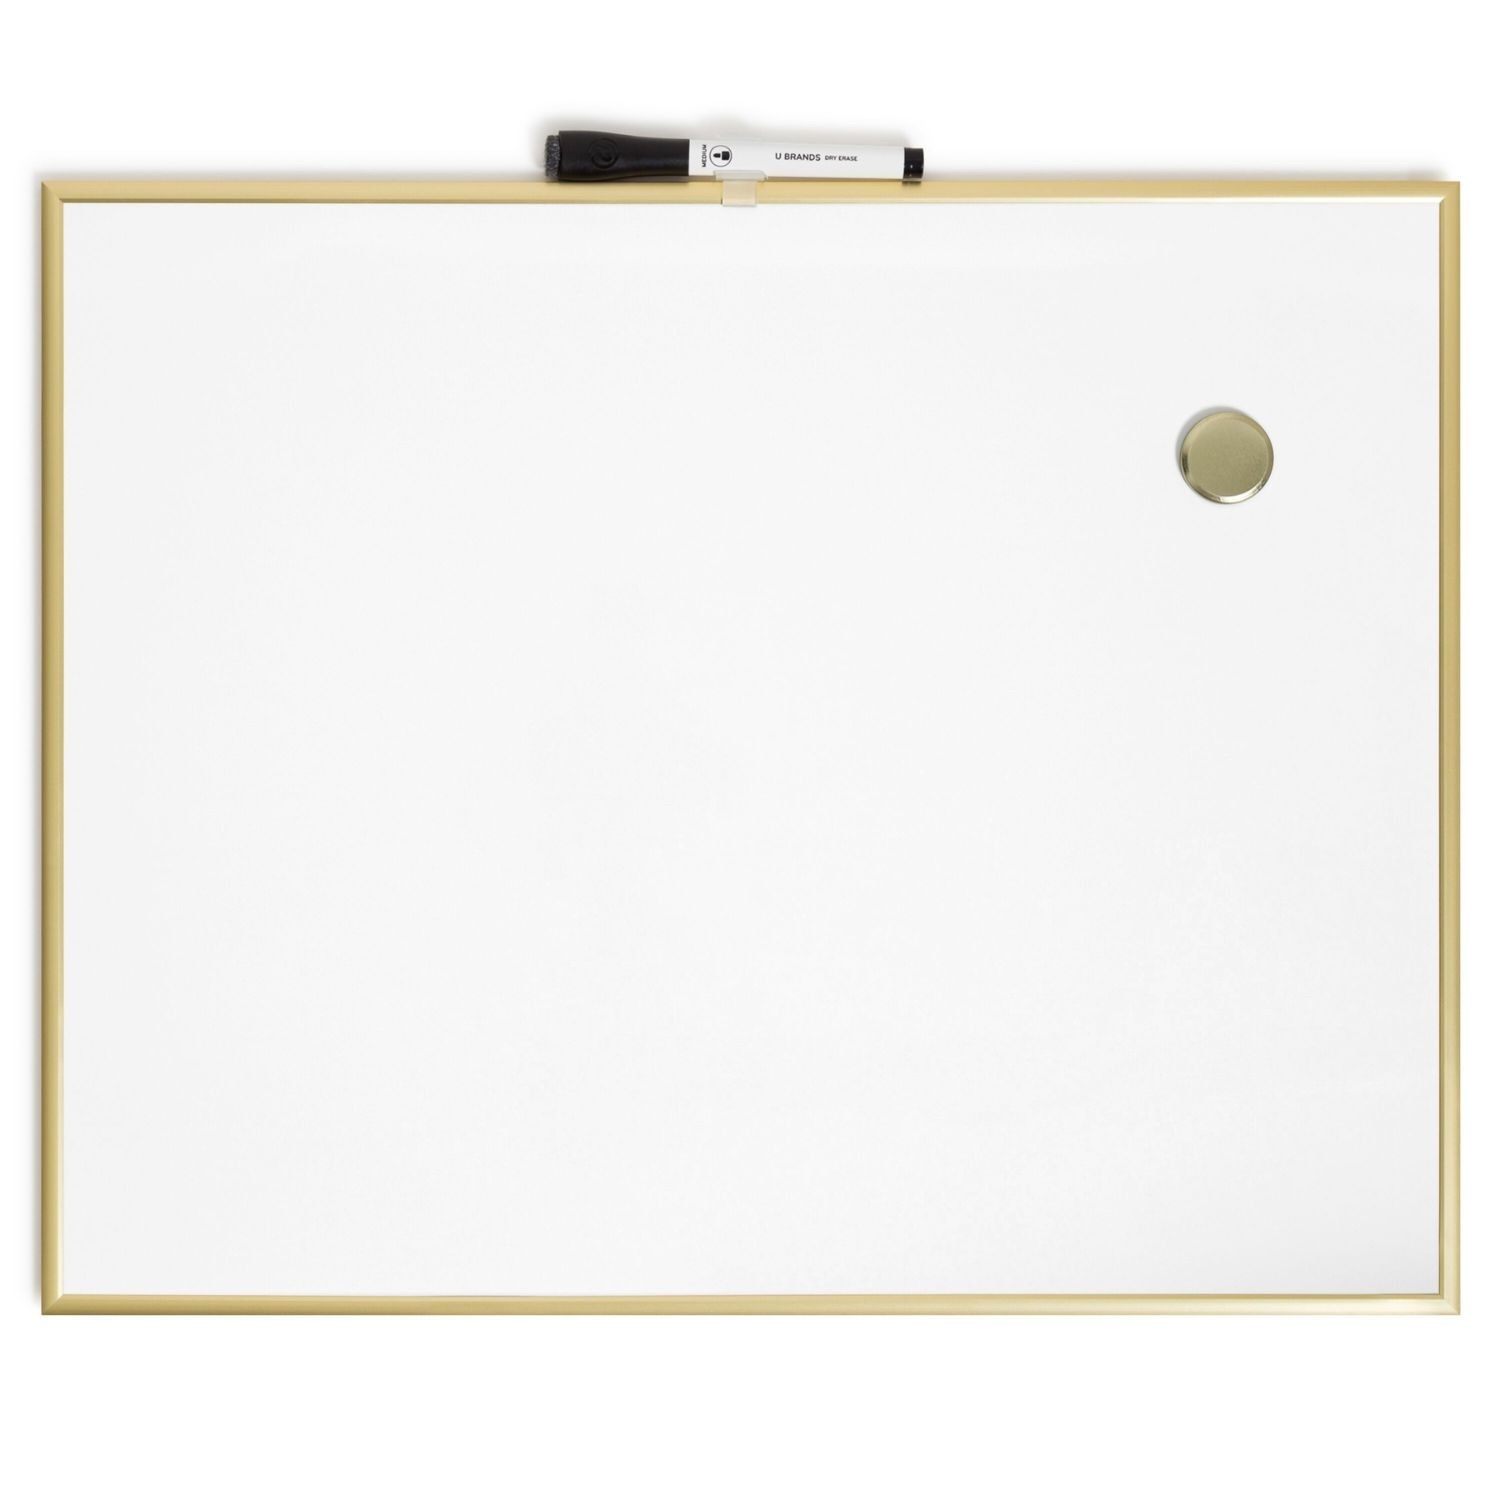 U Brands Dry Erase Board, Gold Metal Frame 16x20